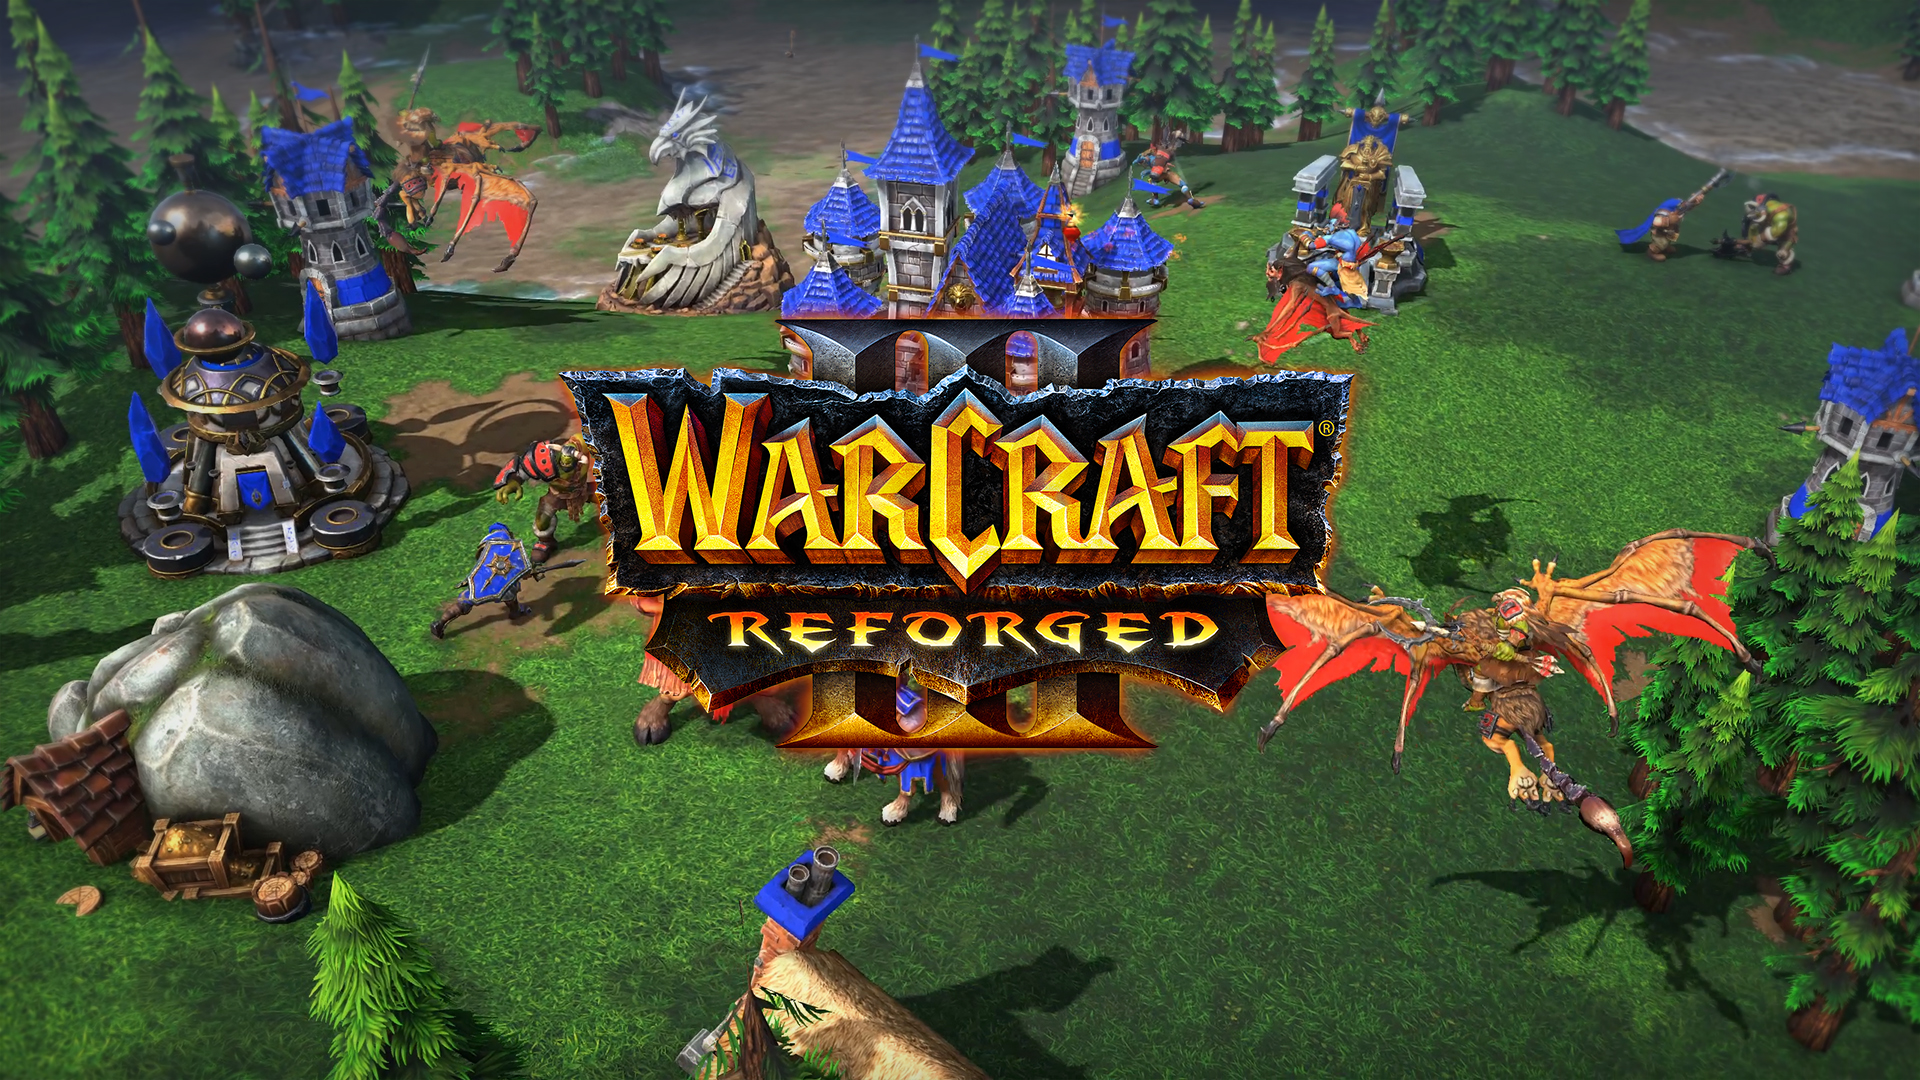 Giới thiệu về game Warcraft 3 